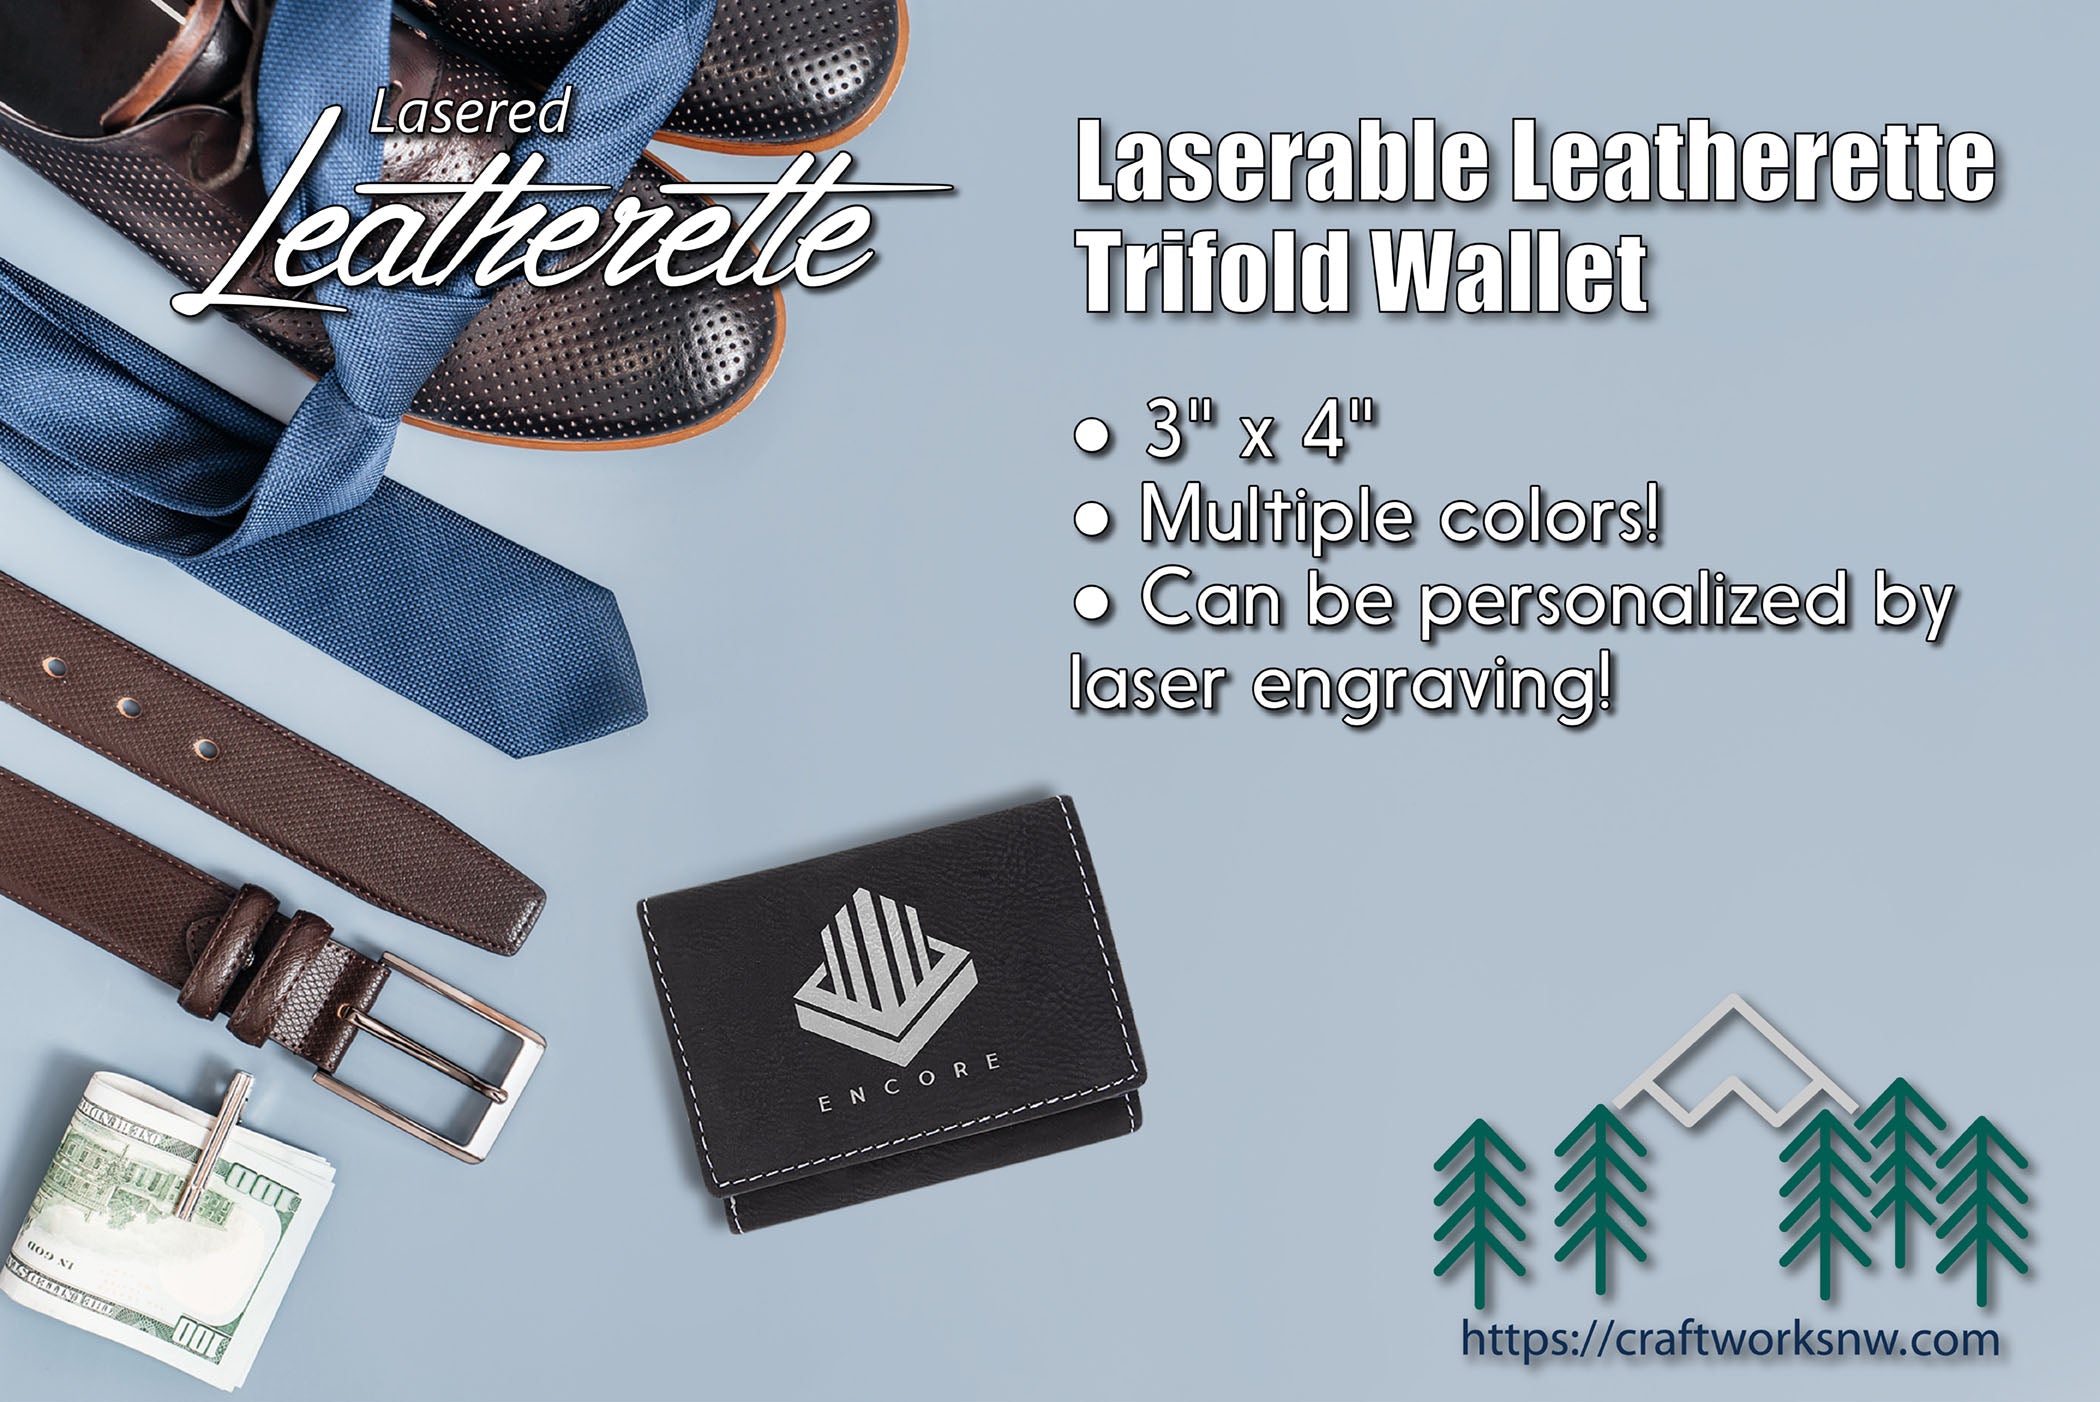 Trifold Wallet, Laserable Leatherette, Laser Engraved - Craftworks NW, LLC